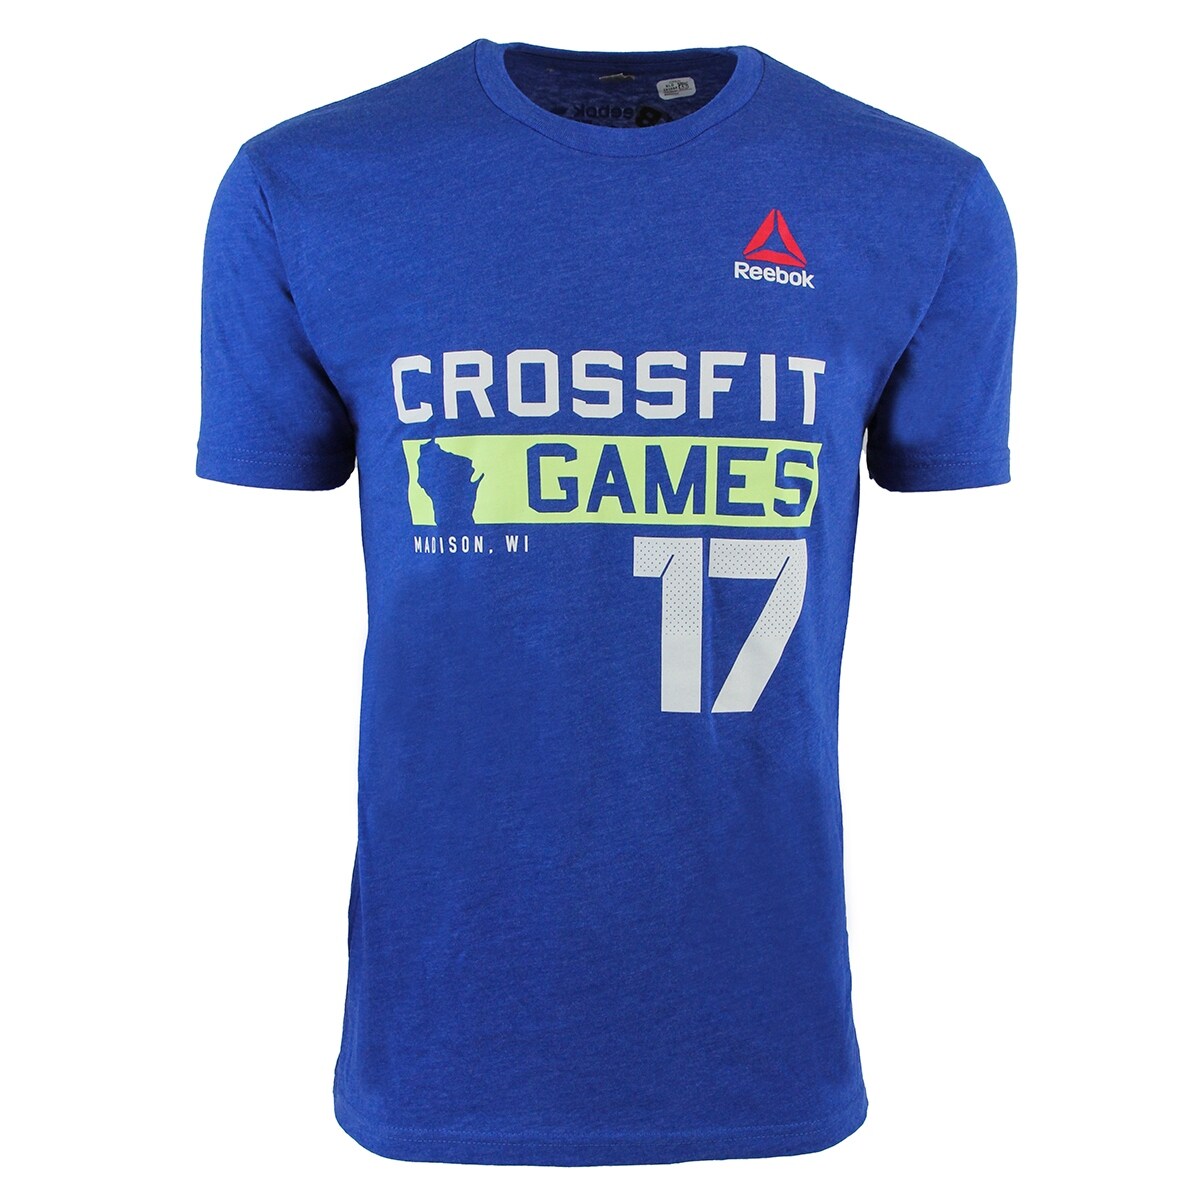 Crossfit Games 2017 Jersey T-Shirt 